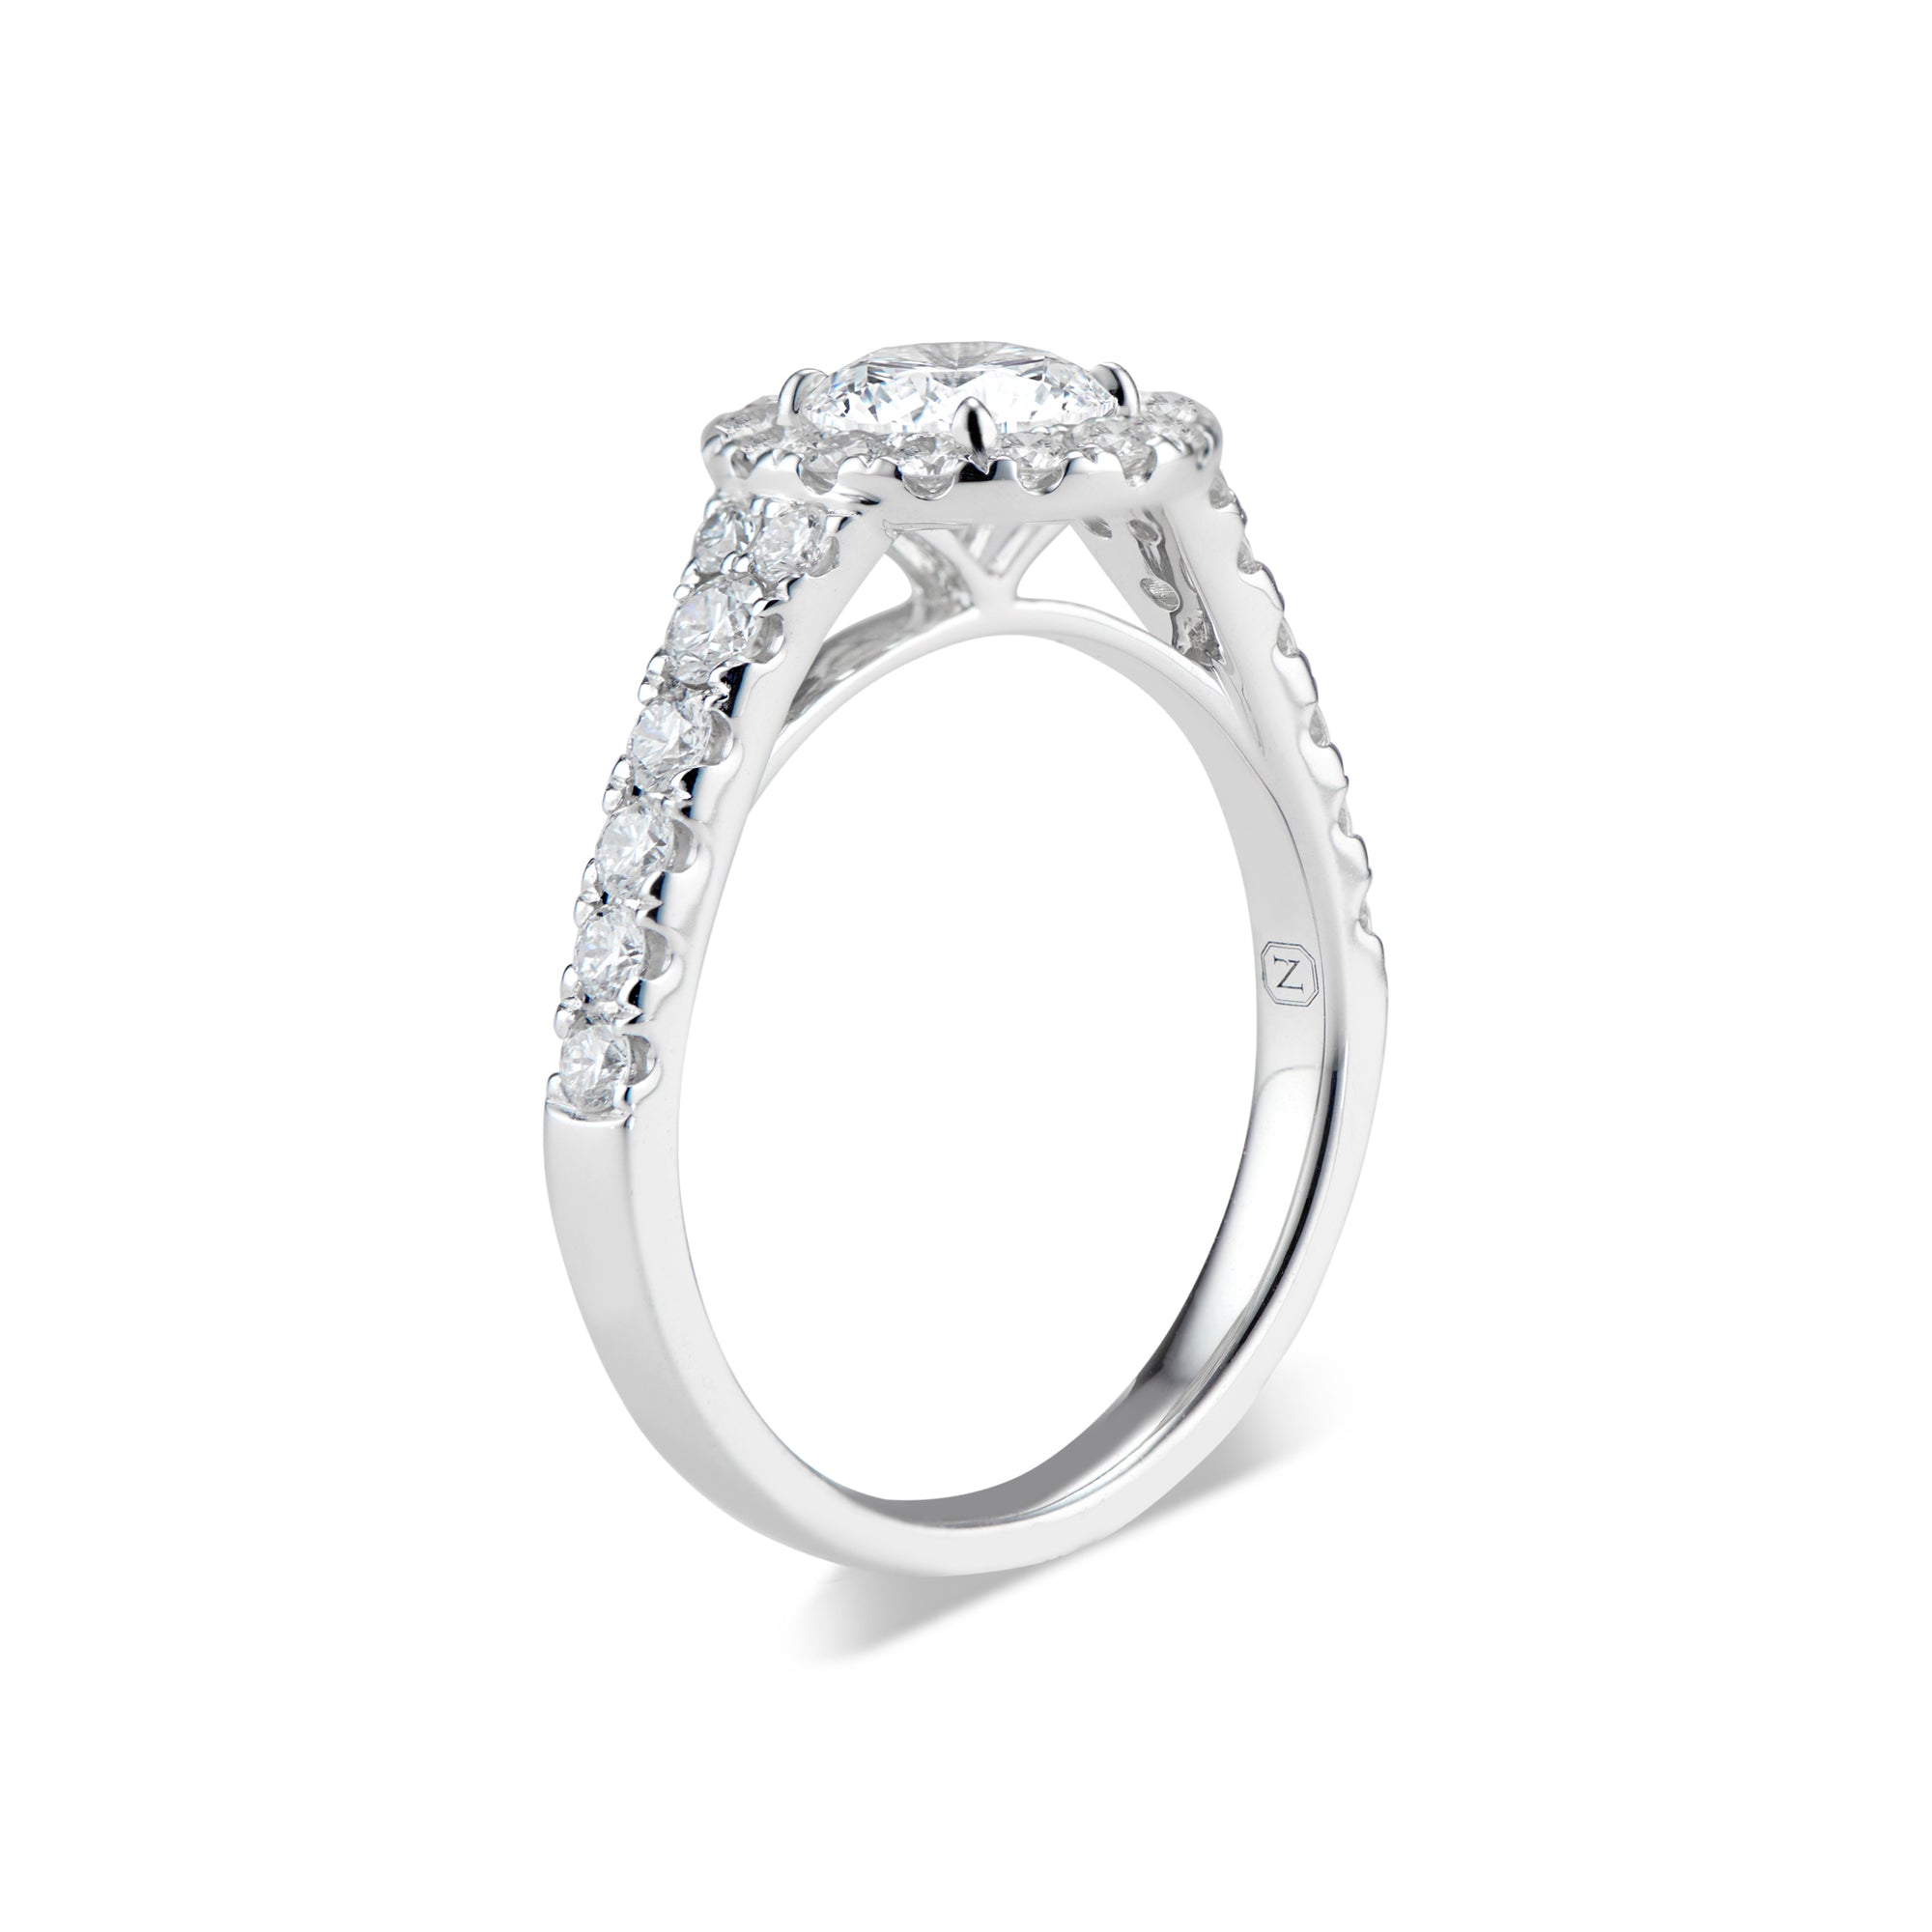 Round Halo Diamond Engagement Ring  -18K weighting 3.94 GR  - 28 round diamonds totaling 0.69 carats